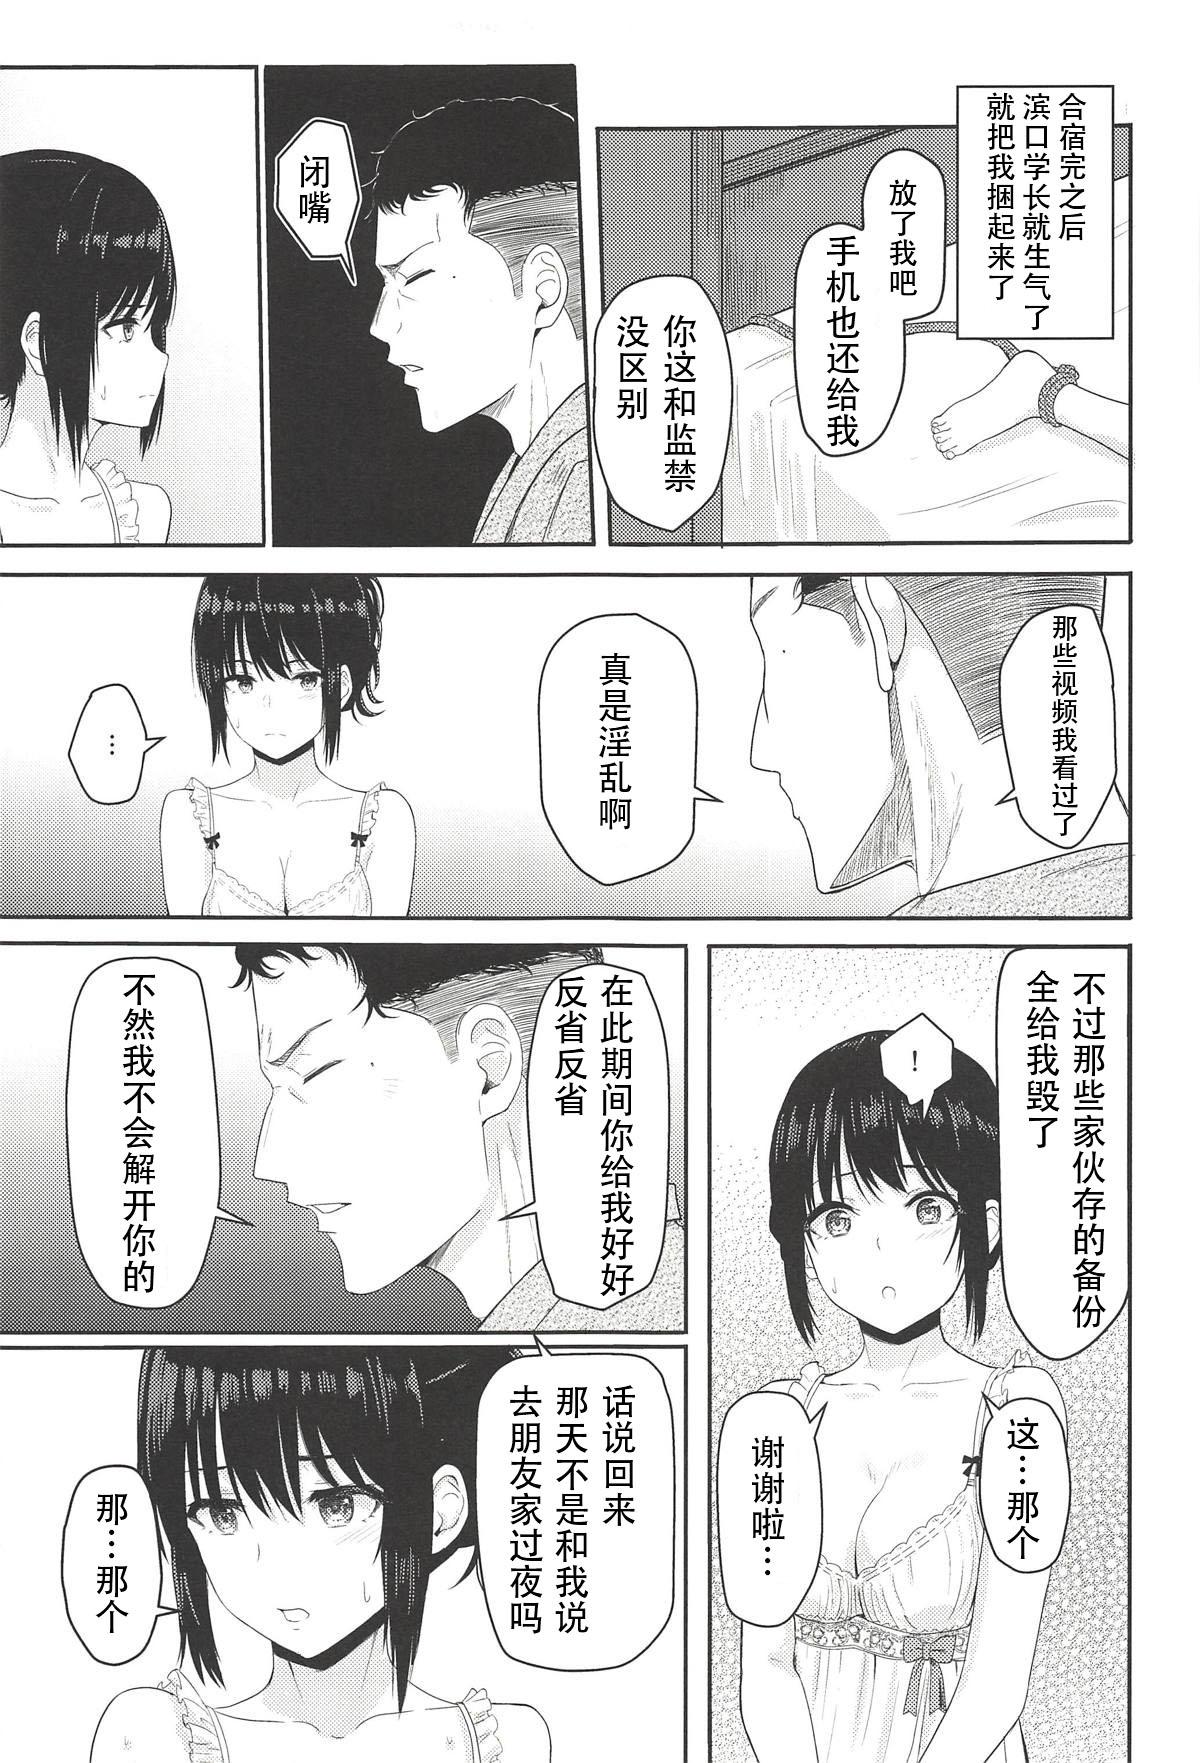 Gape Mitsuha - Kimi no na wa. Sexo Anal - Page 10